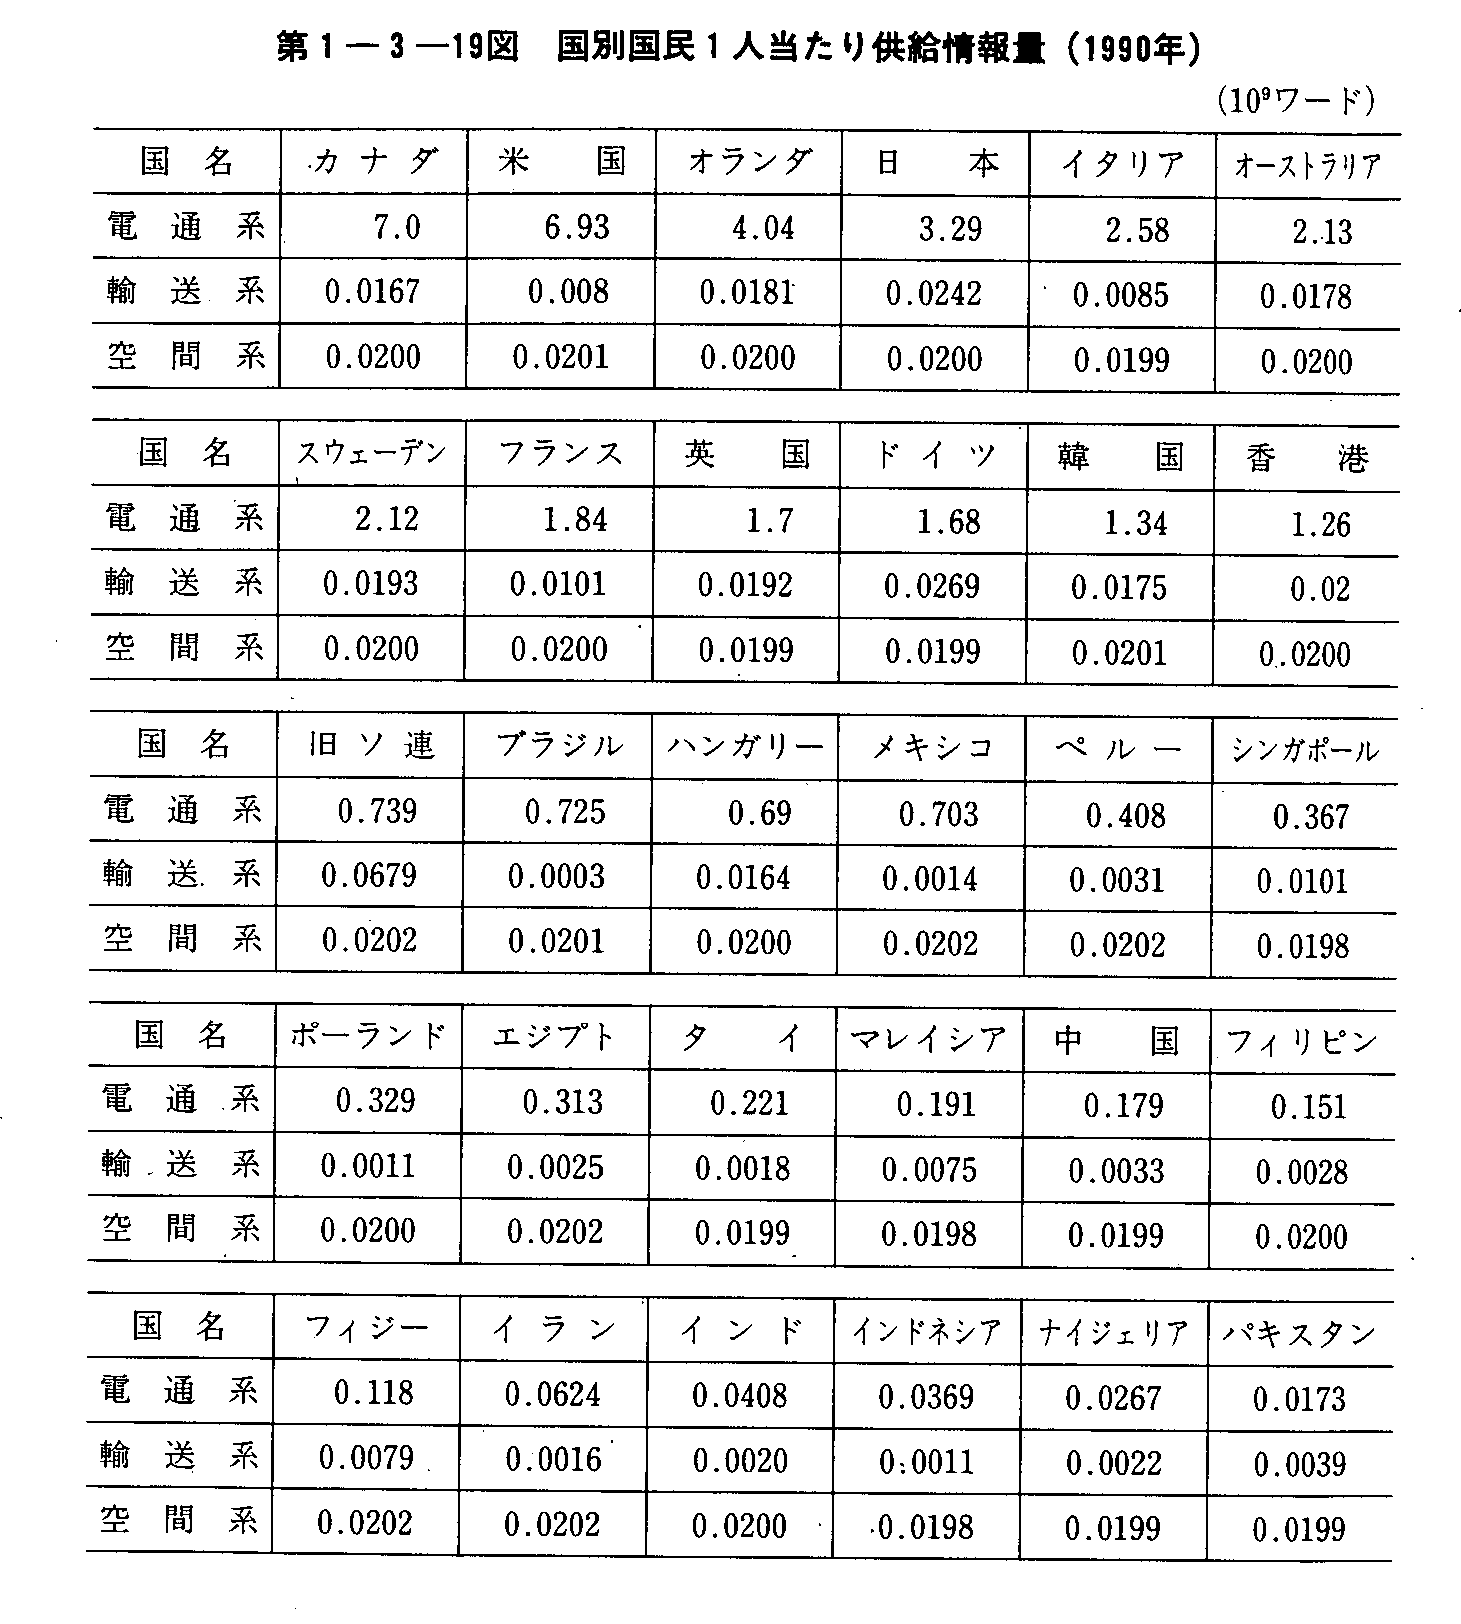 1-3-19} ʍ1l苟(1990N)